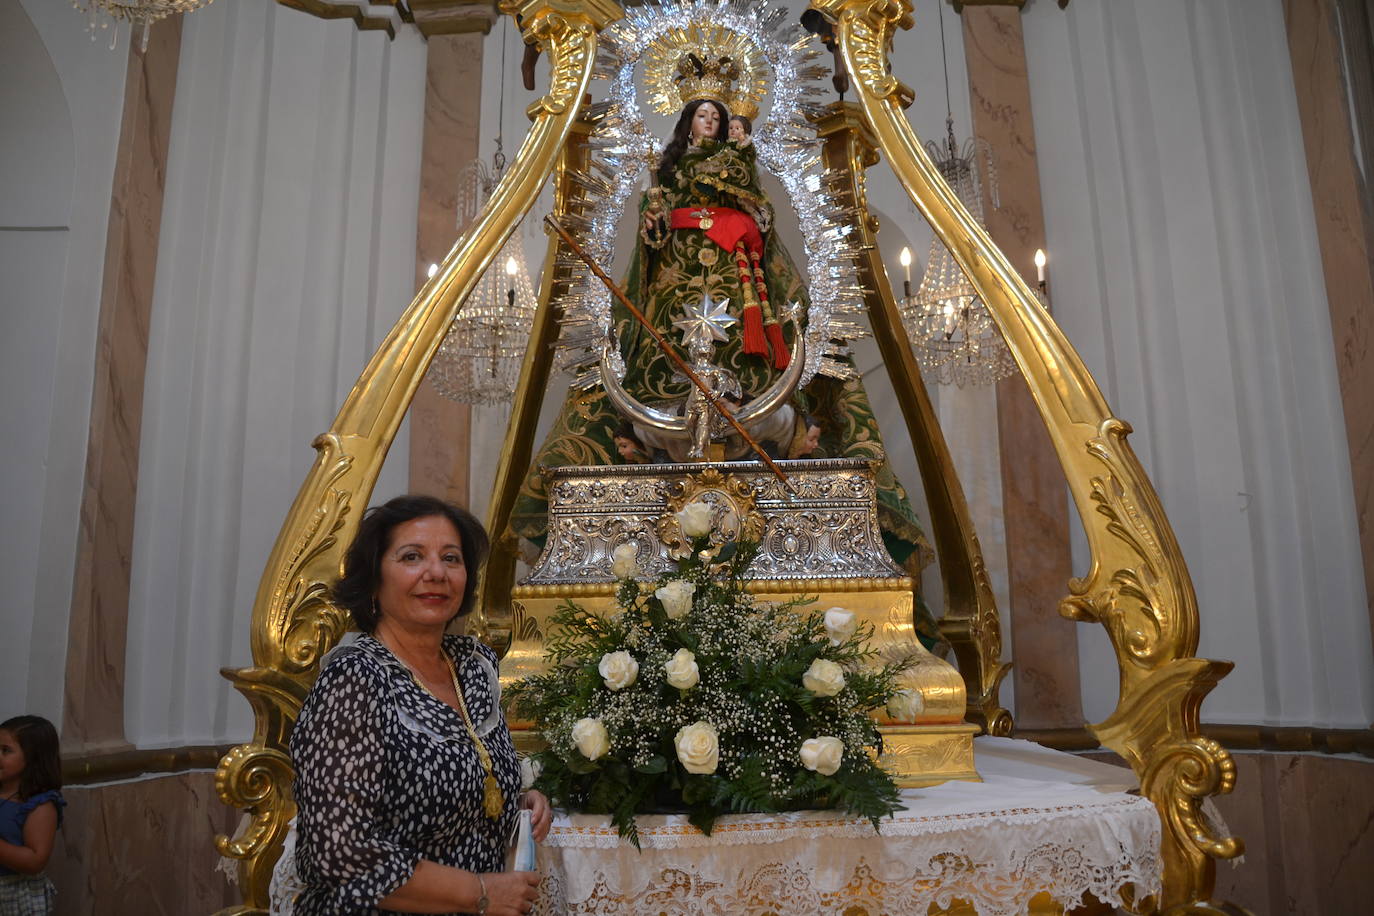 La mayordoma de la Virgen Mari carmen Tinoco jjunto a la imagen de la Virgen en su trono 